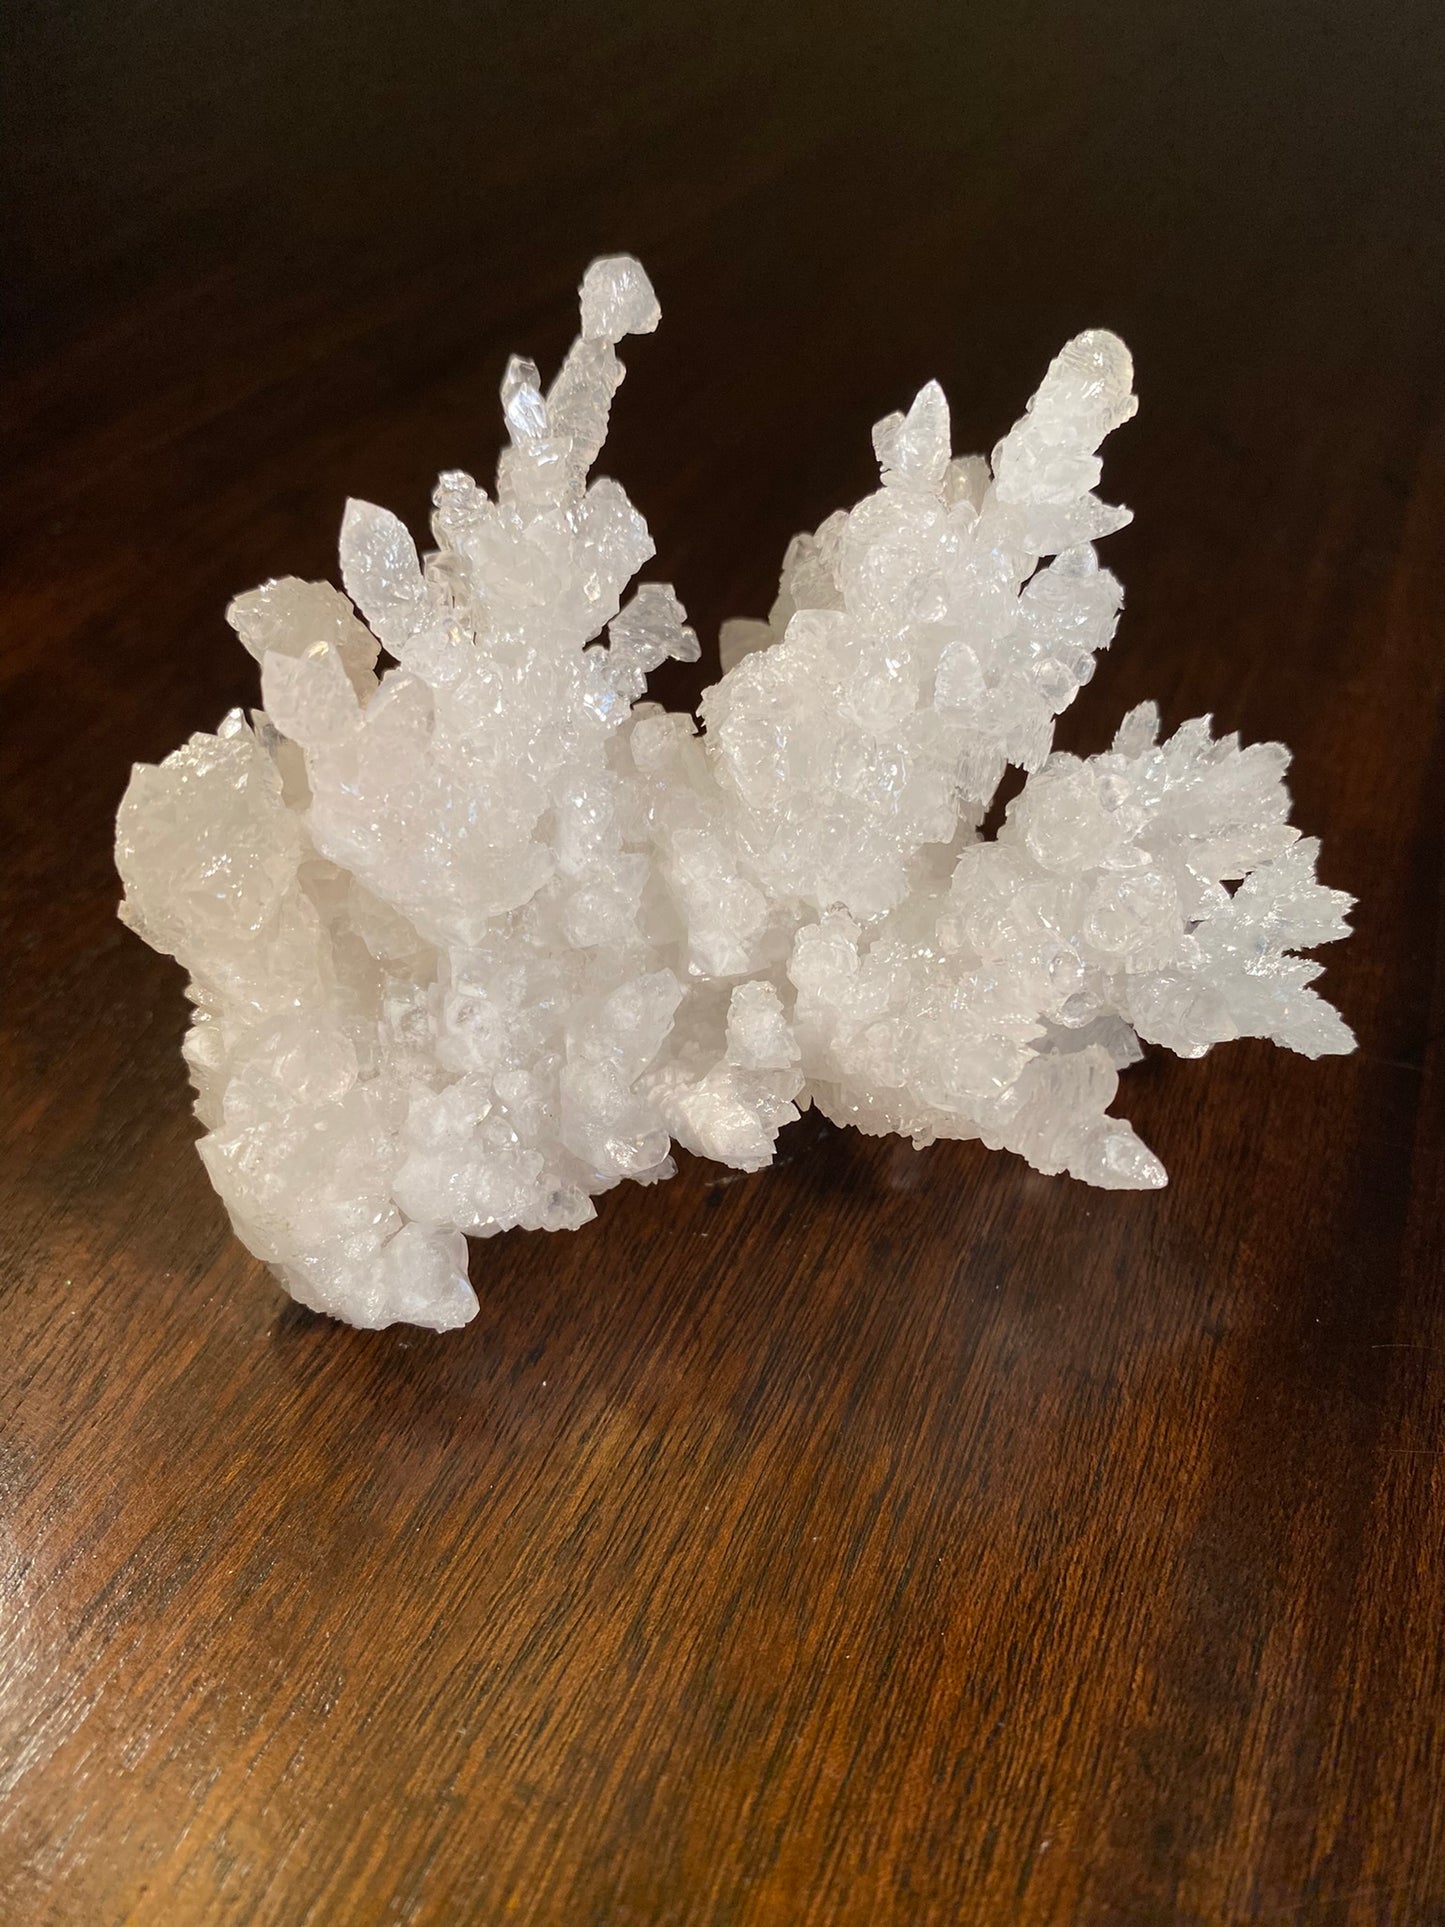 Calcite "snowflake", Mexico